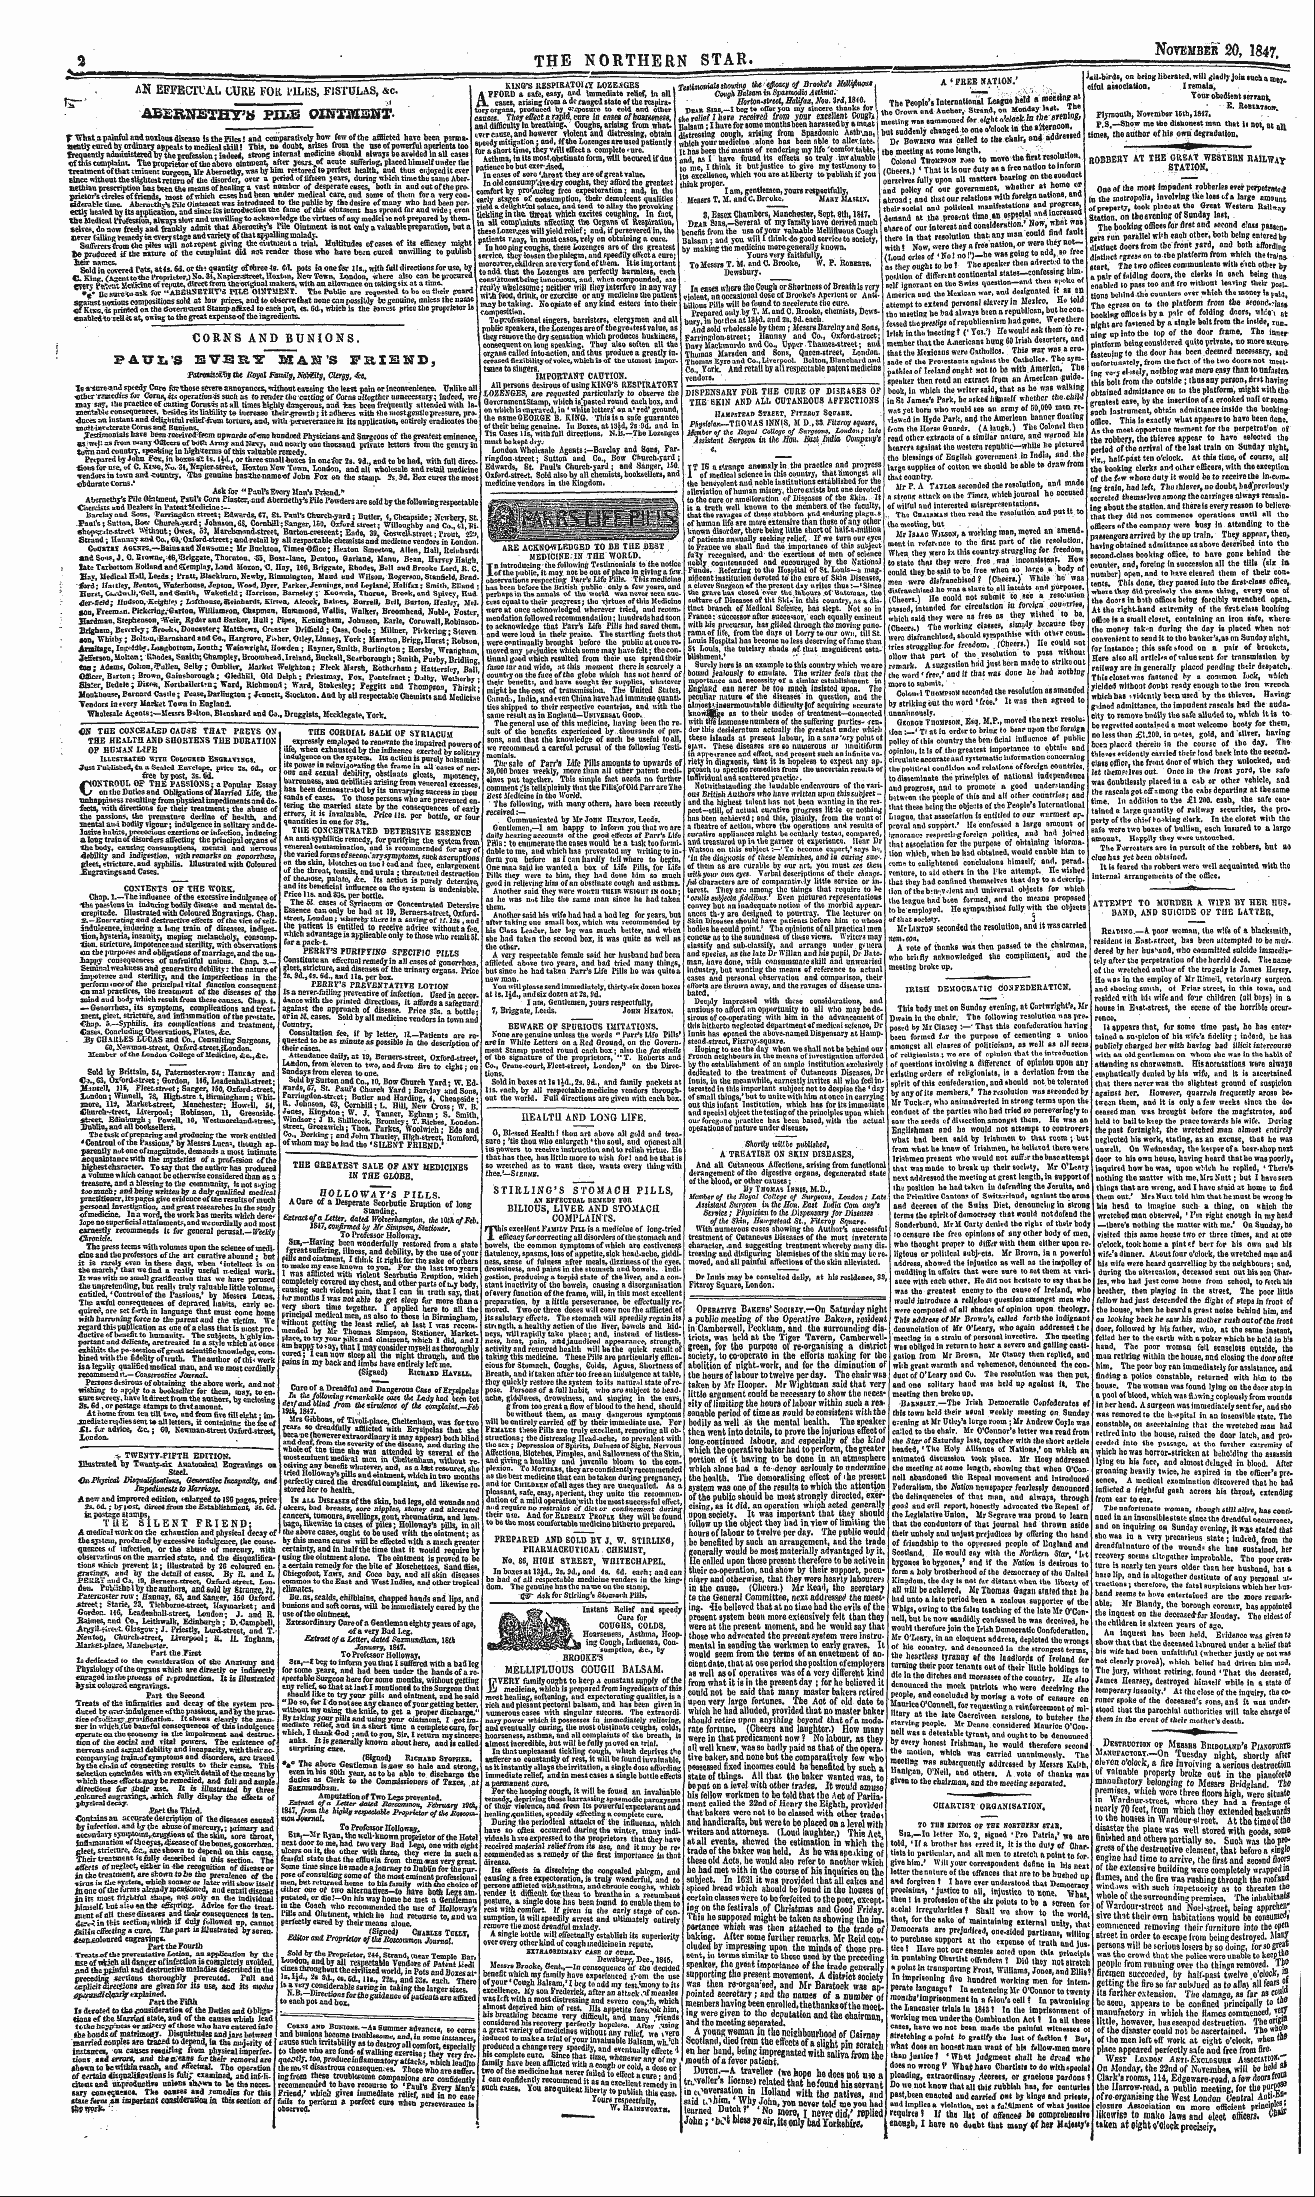 Northern Star (1837-1852): jS F Y, 3rd edition - Ad00211